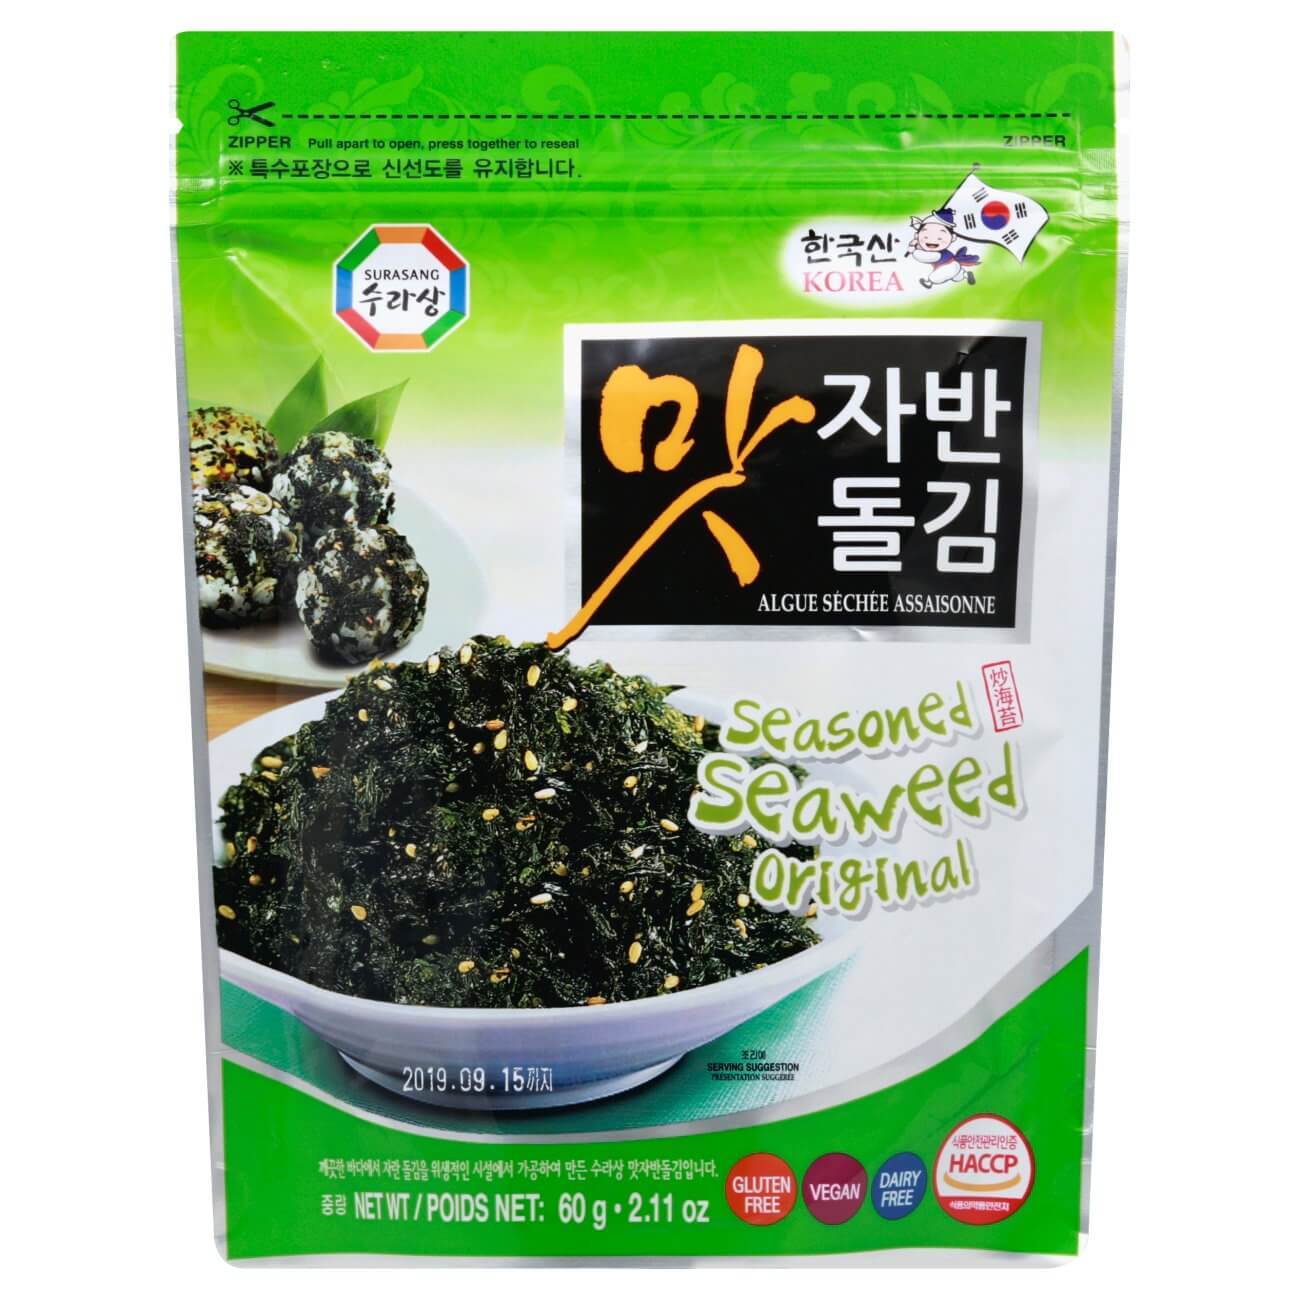 Surasang Seasoned Seaweed (original flavor) - 60g/2.11oz